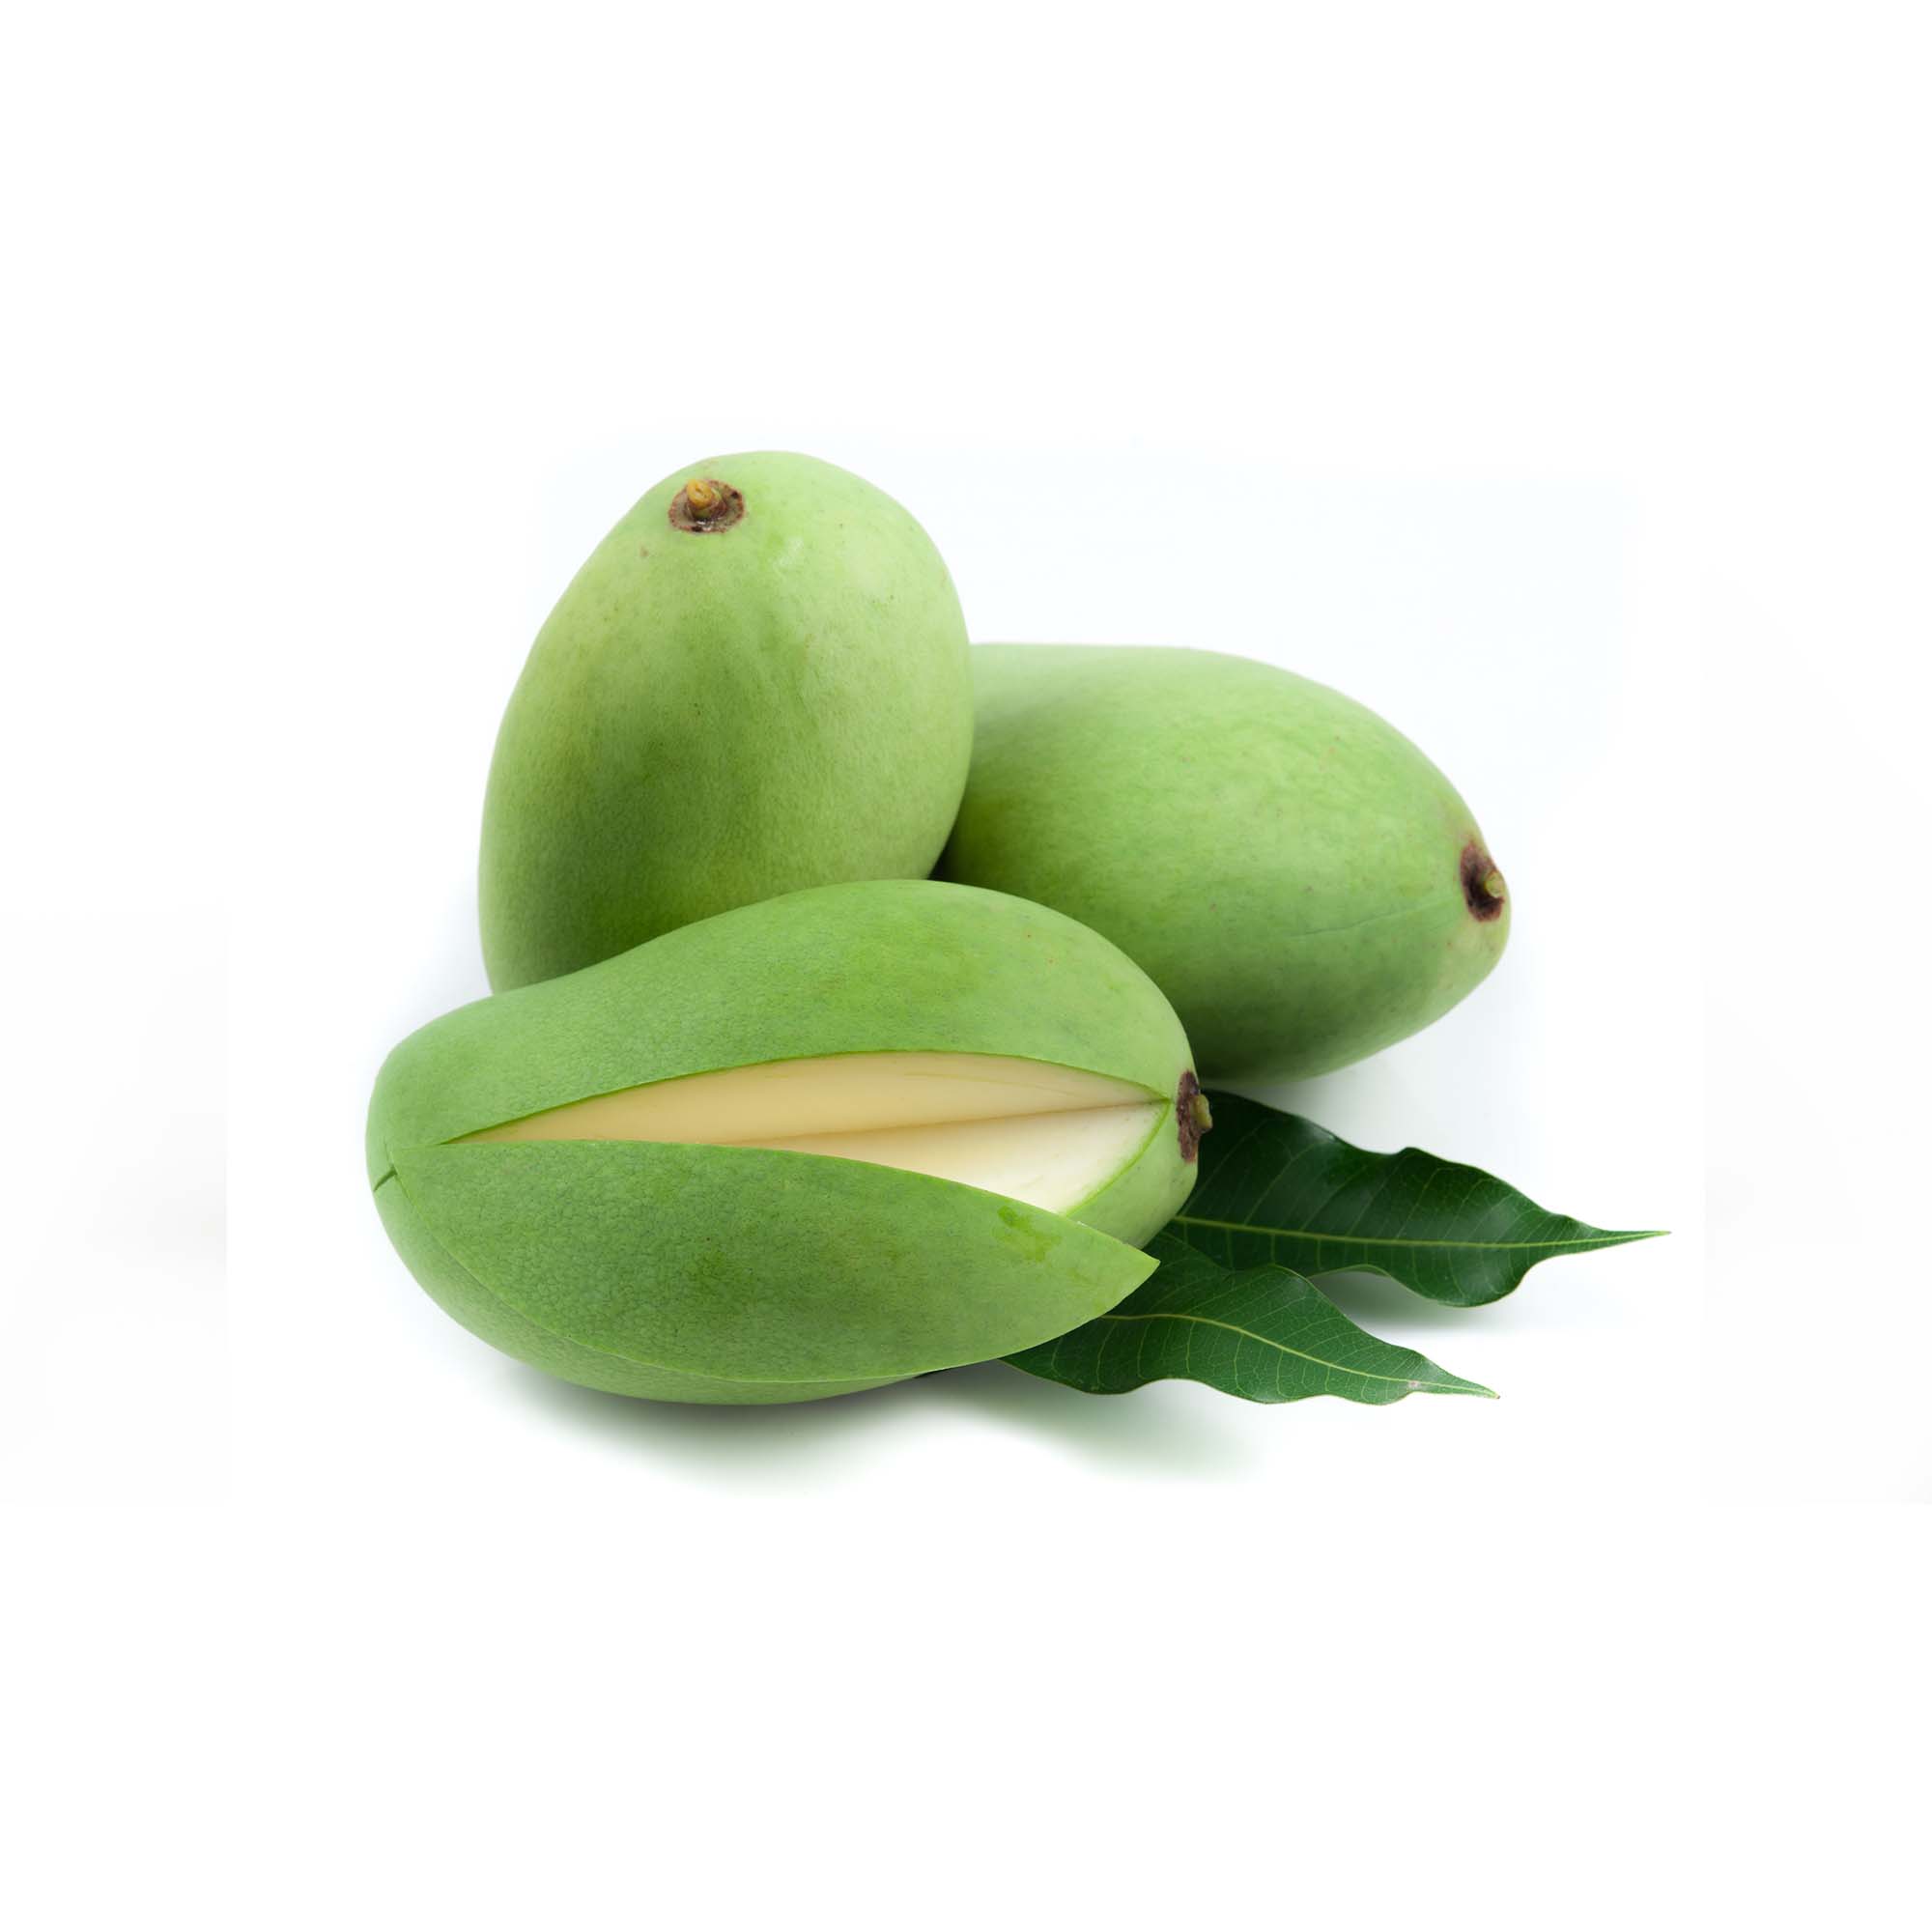 Mango - Raw / Green | Exotic Fruits - Rare & Tropical Exotic Fruit Shop UK